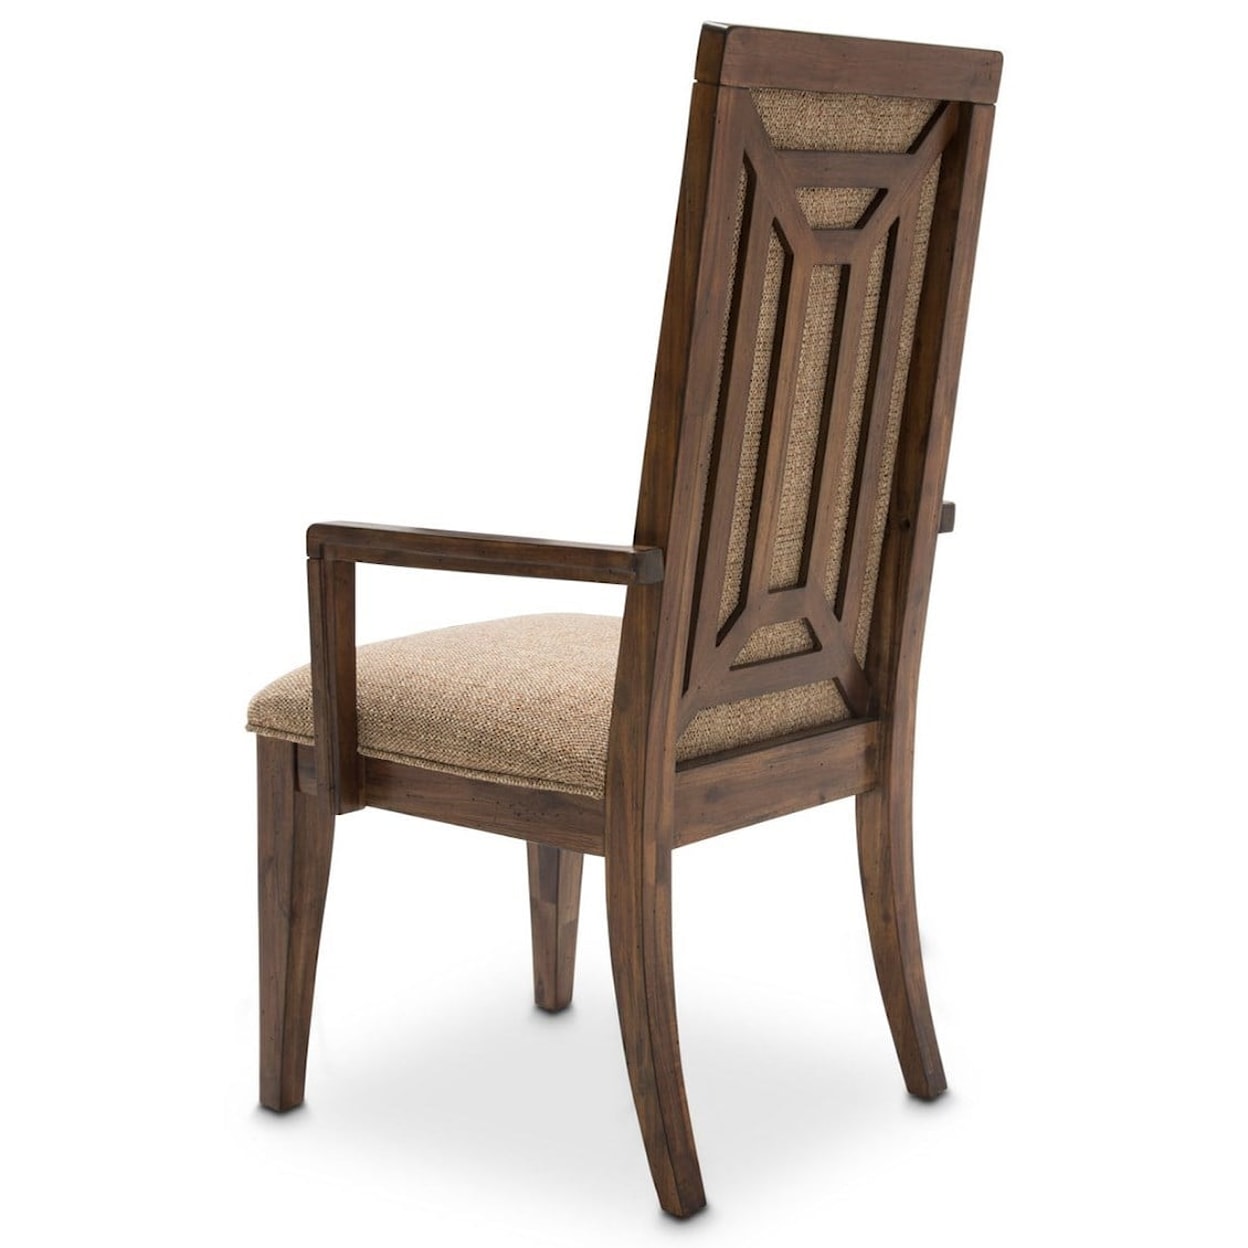 Michael Amini Carrollton Upholstered Arm Chair